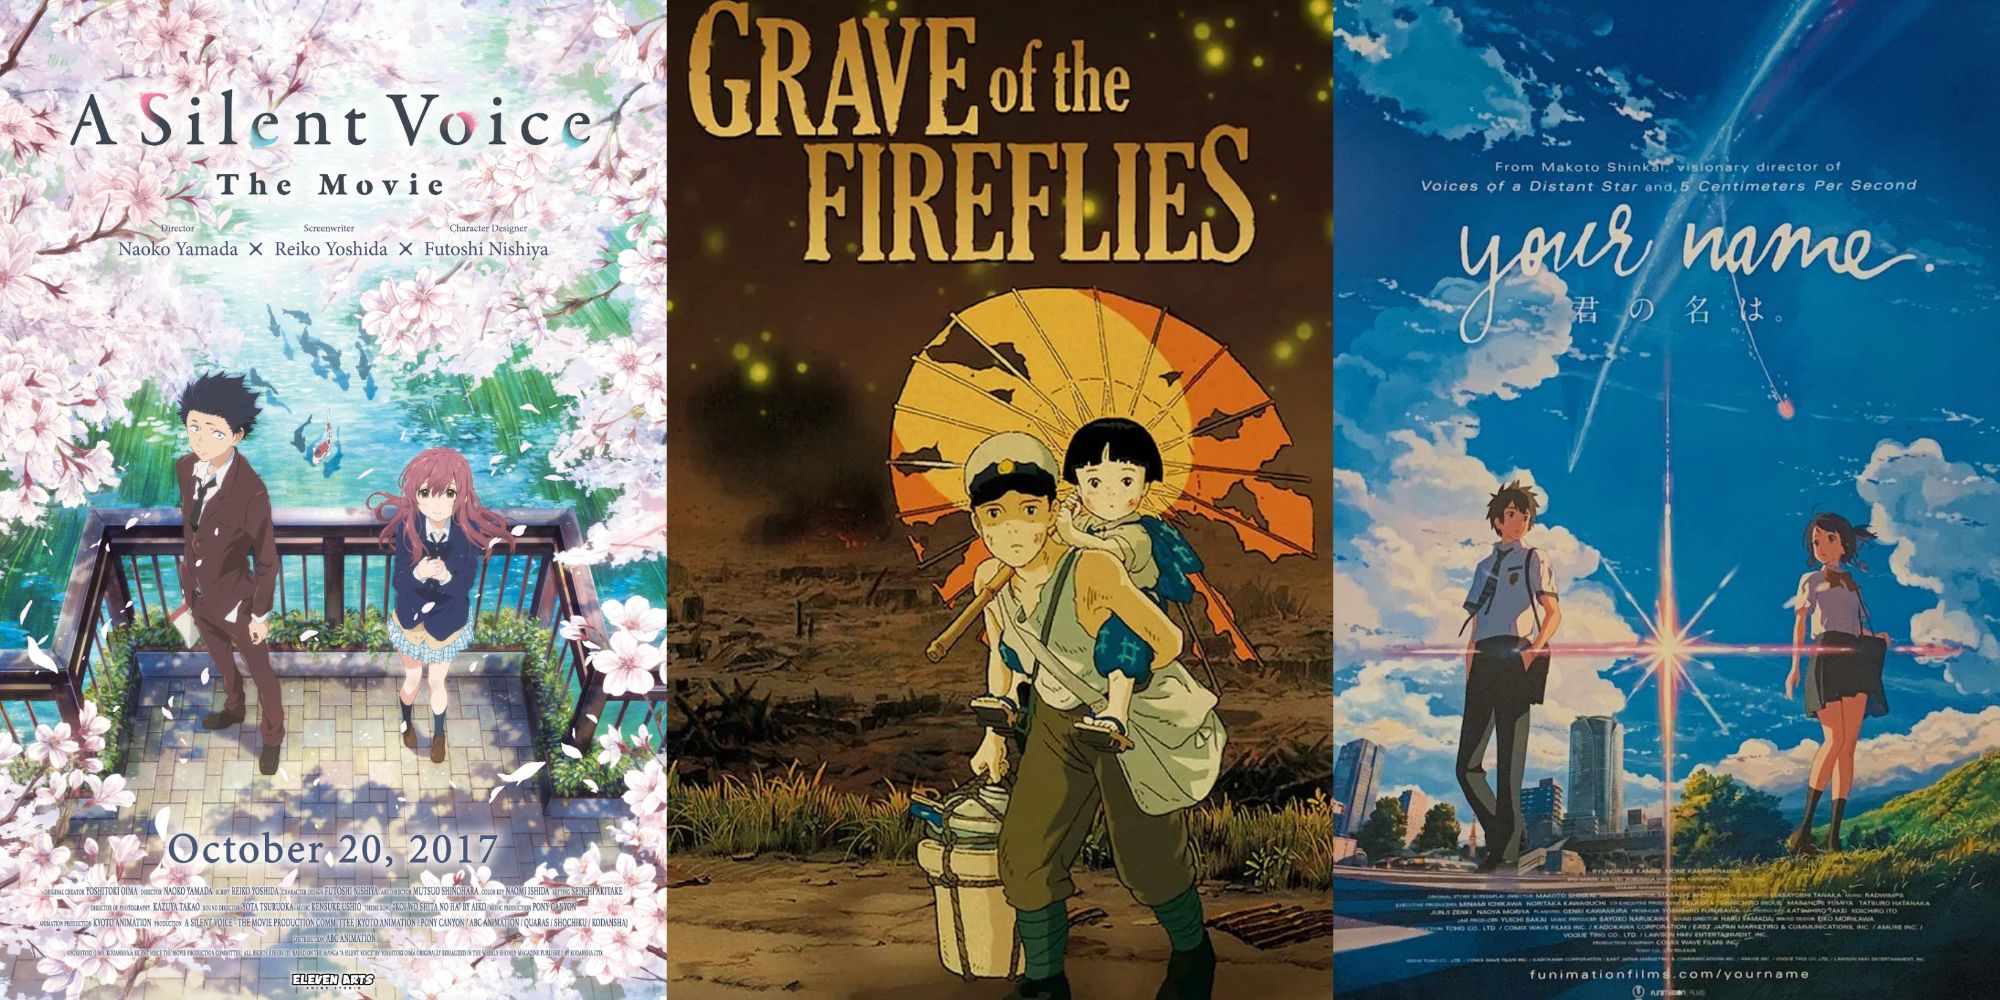 6 top award-winning anime films on Netflix to watch